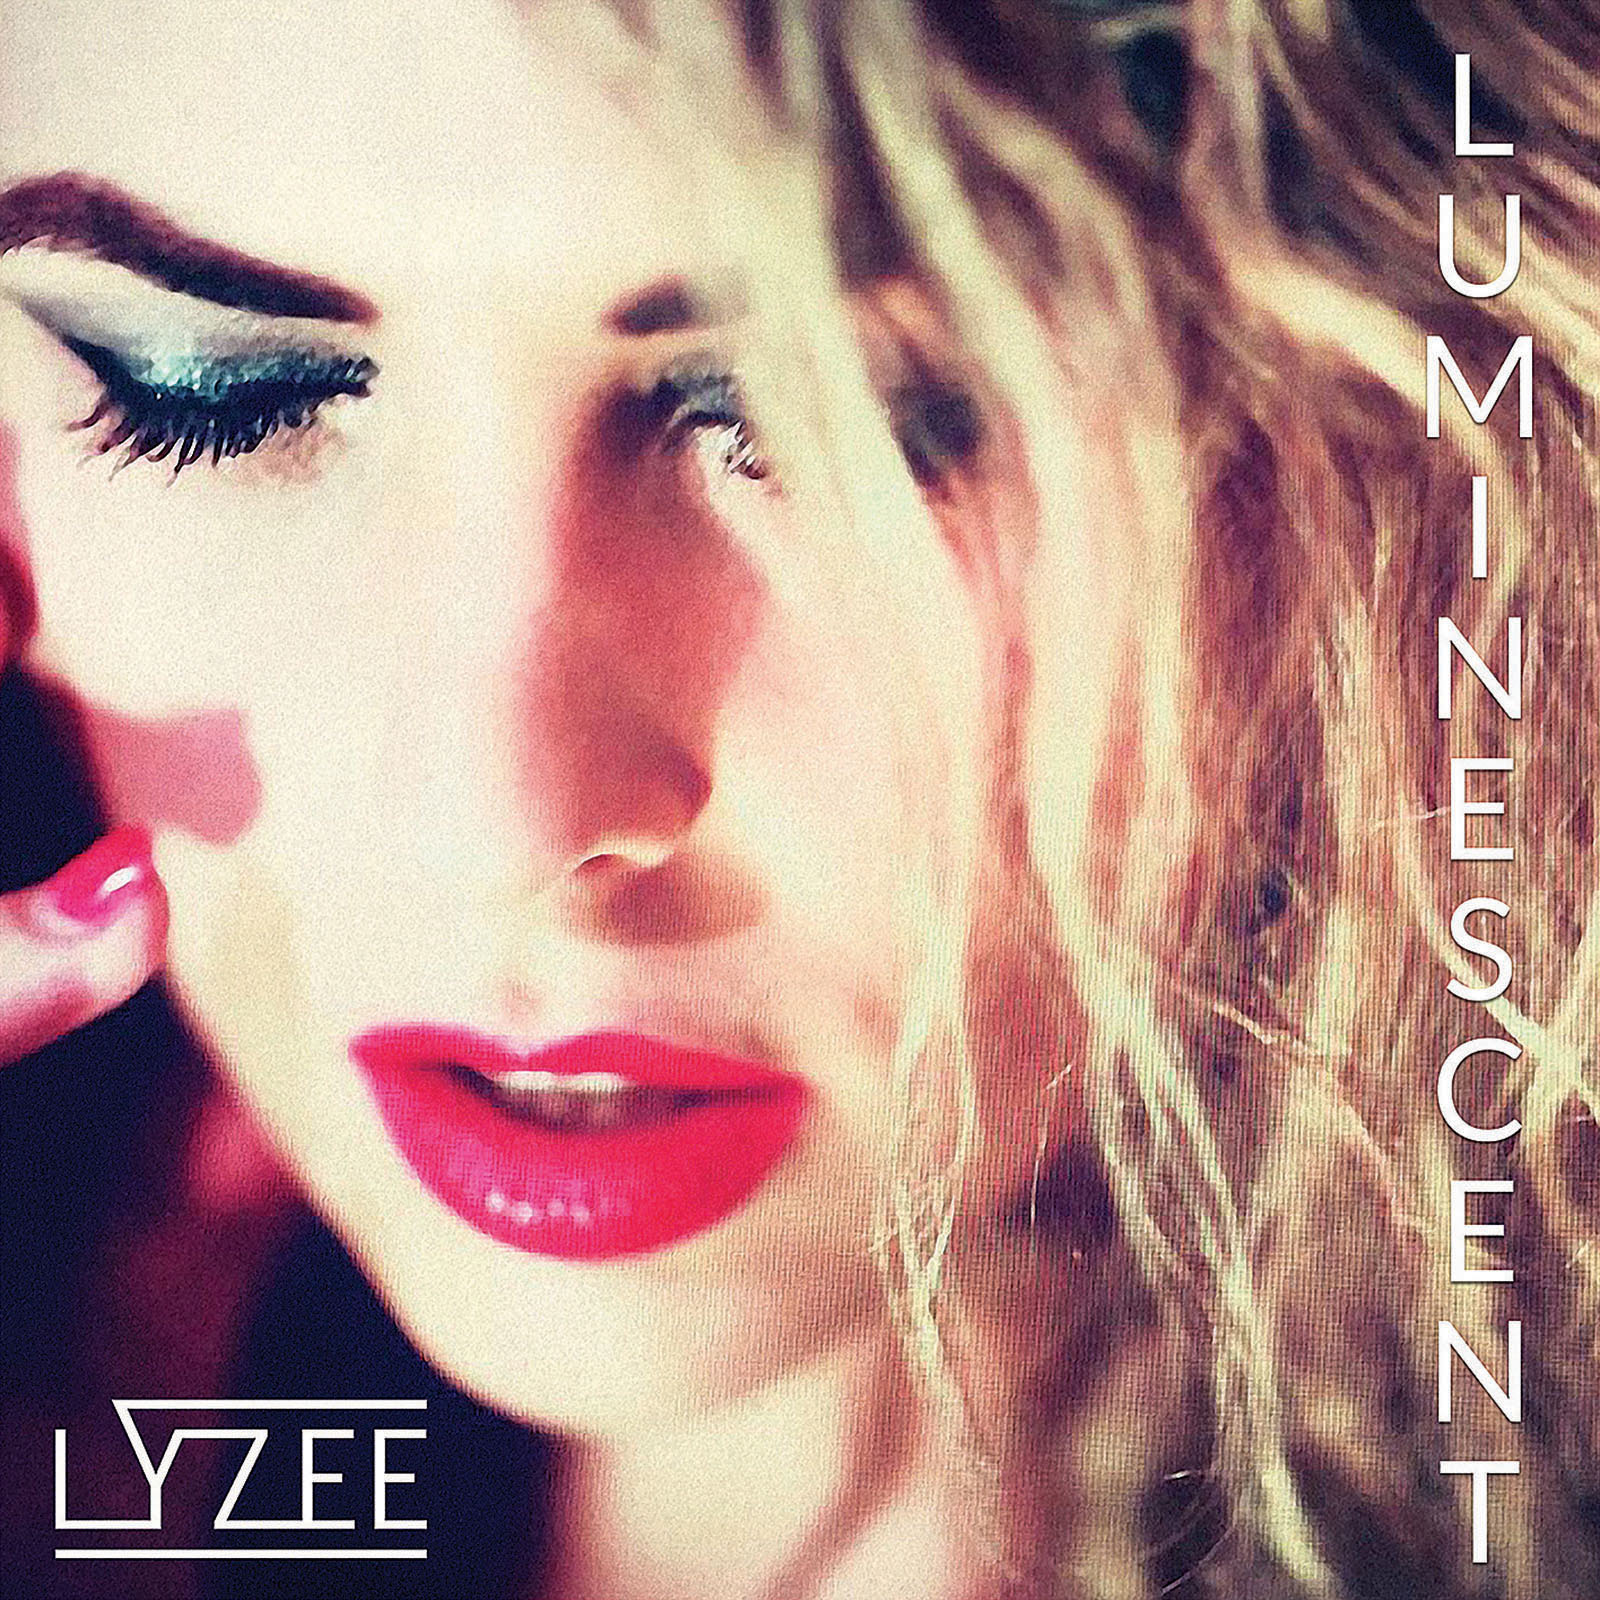 LYZEE Luminescent EP